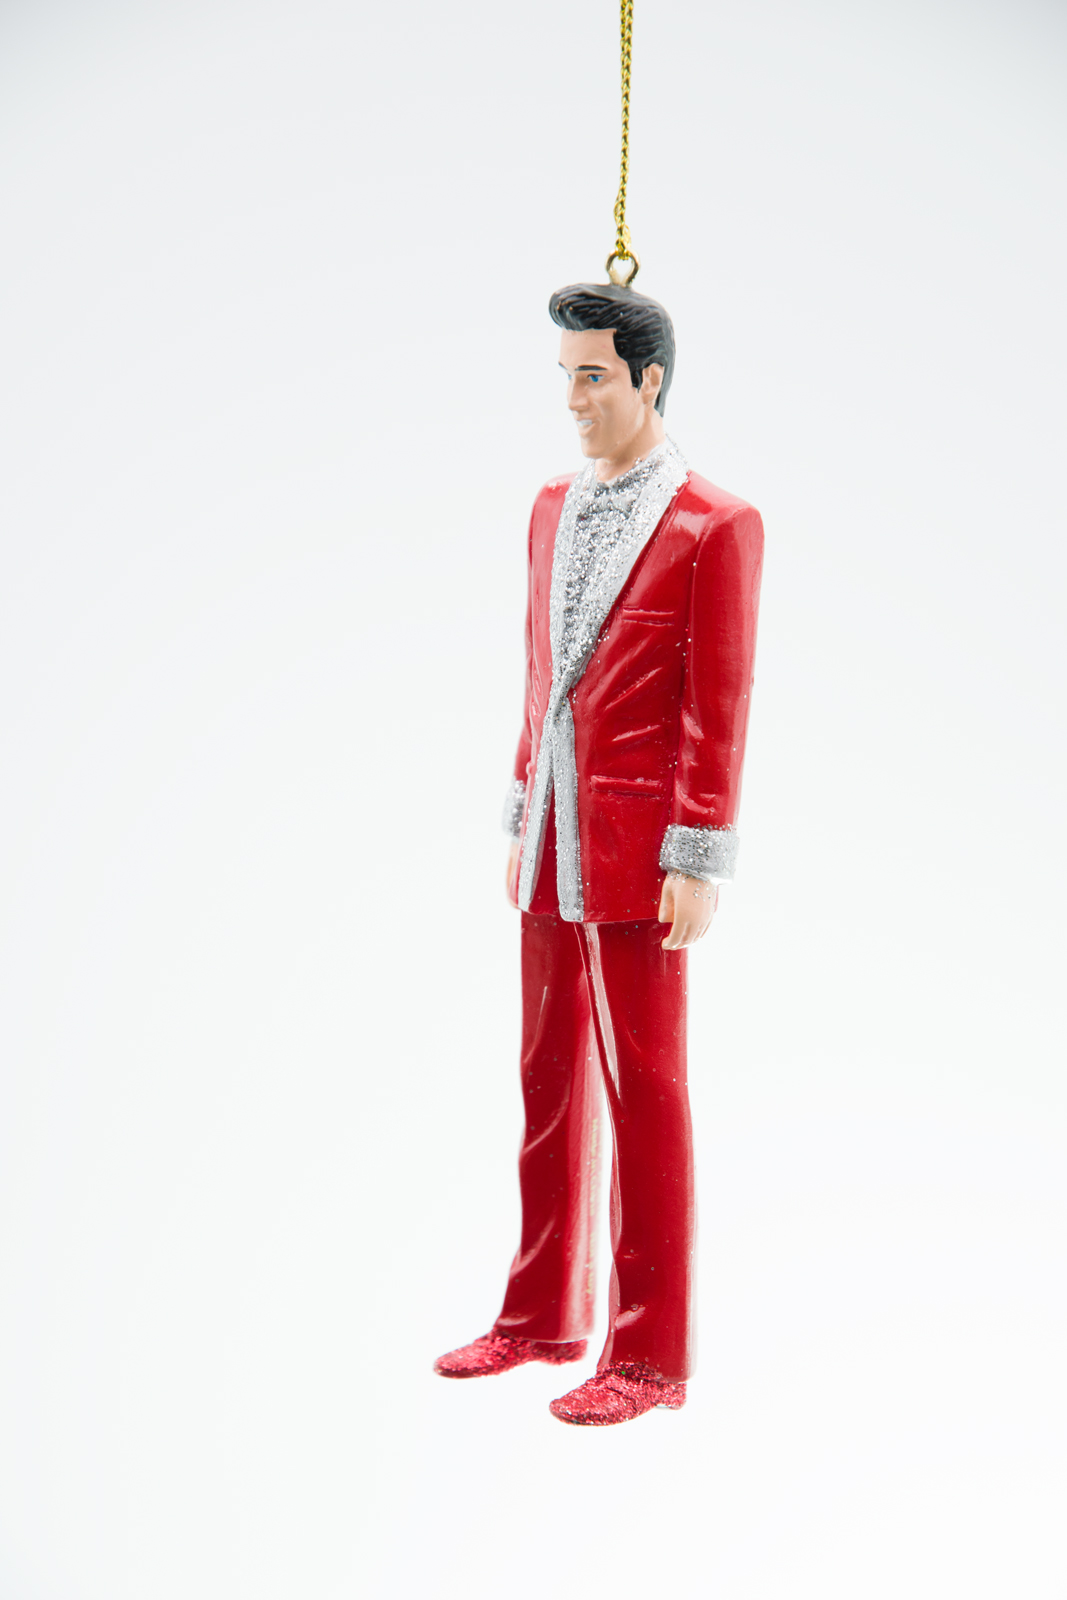 Kurt S. Adler Elvis Presley mit roten Anzug